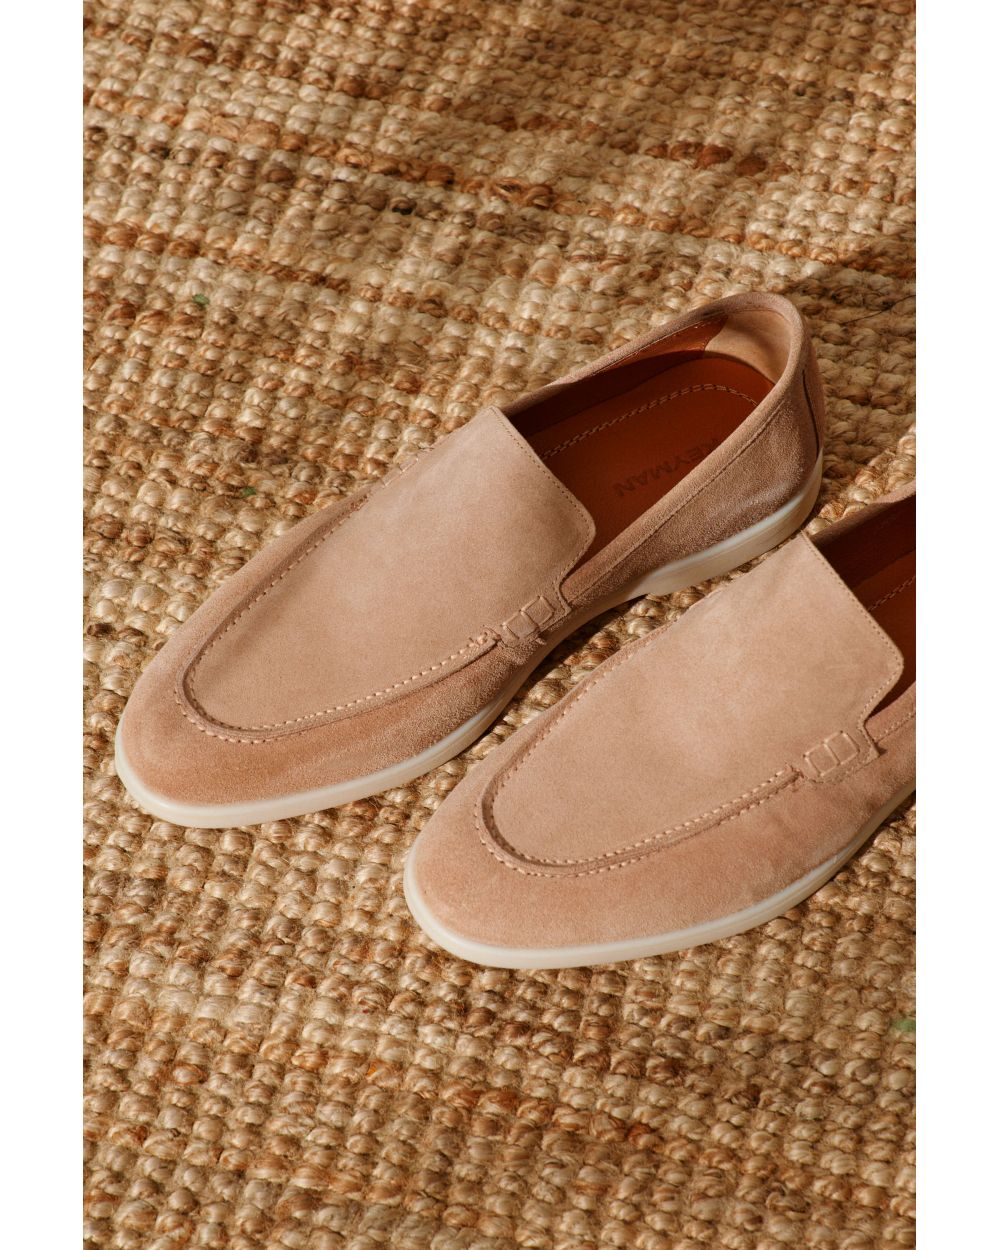 Туфли мужские бежевые замшевые лоферы (summer walk loafers)